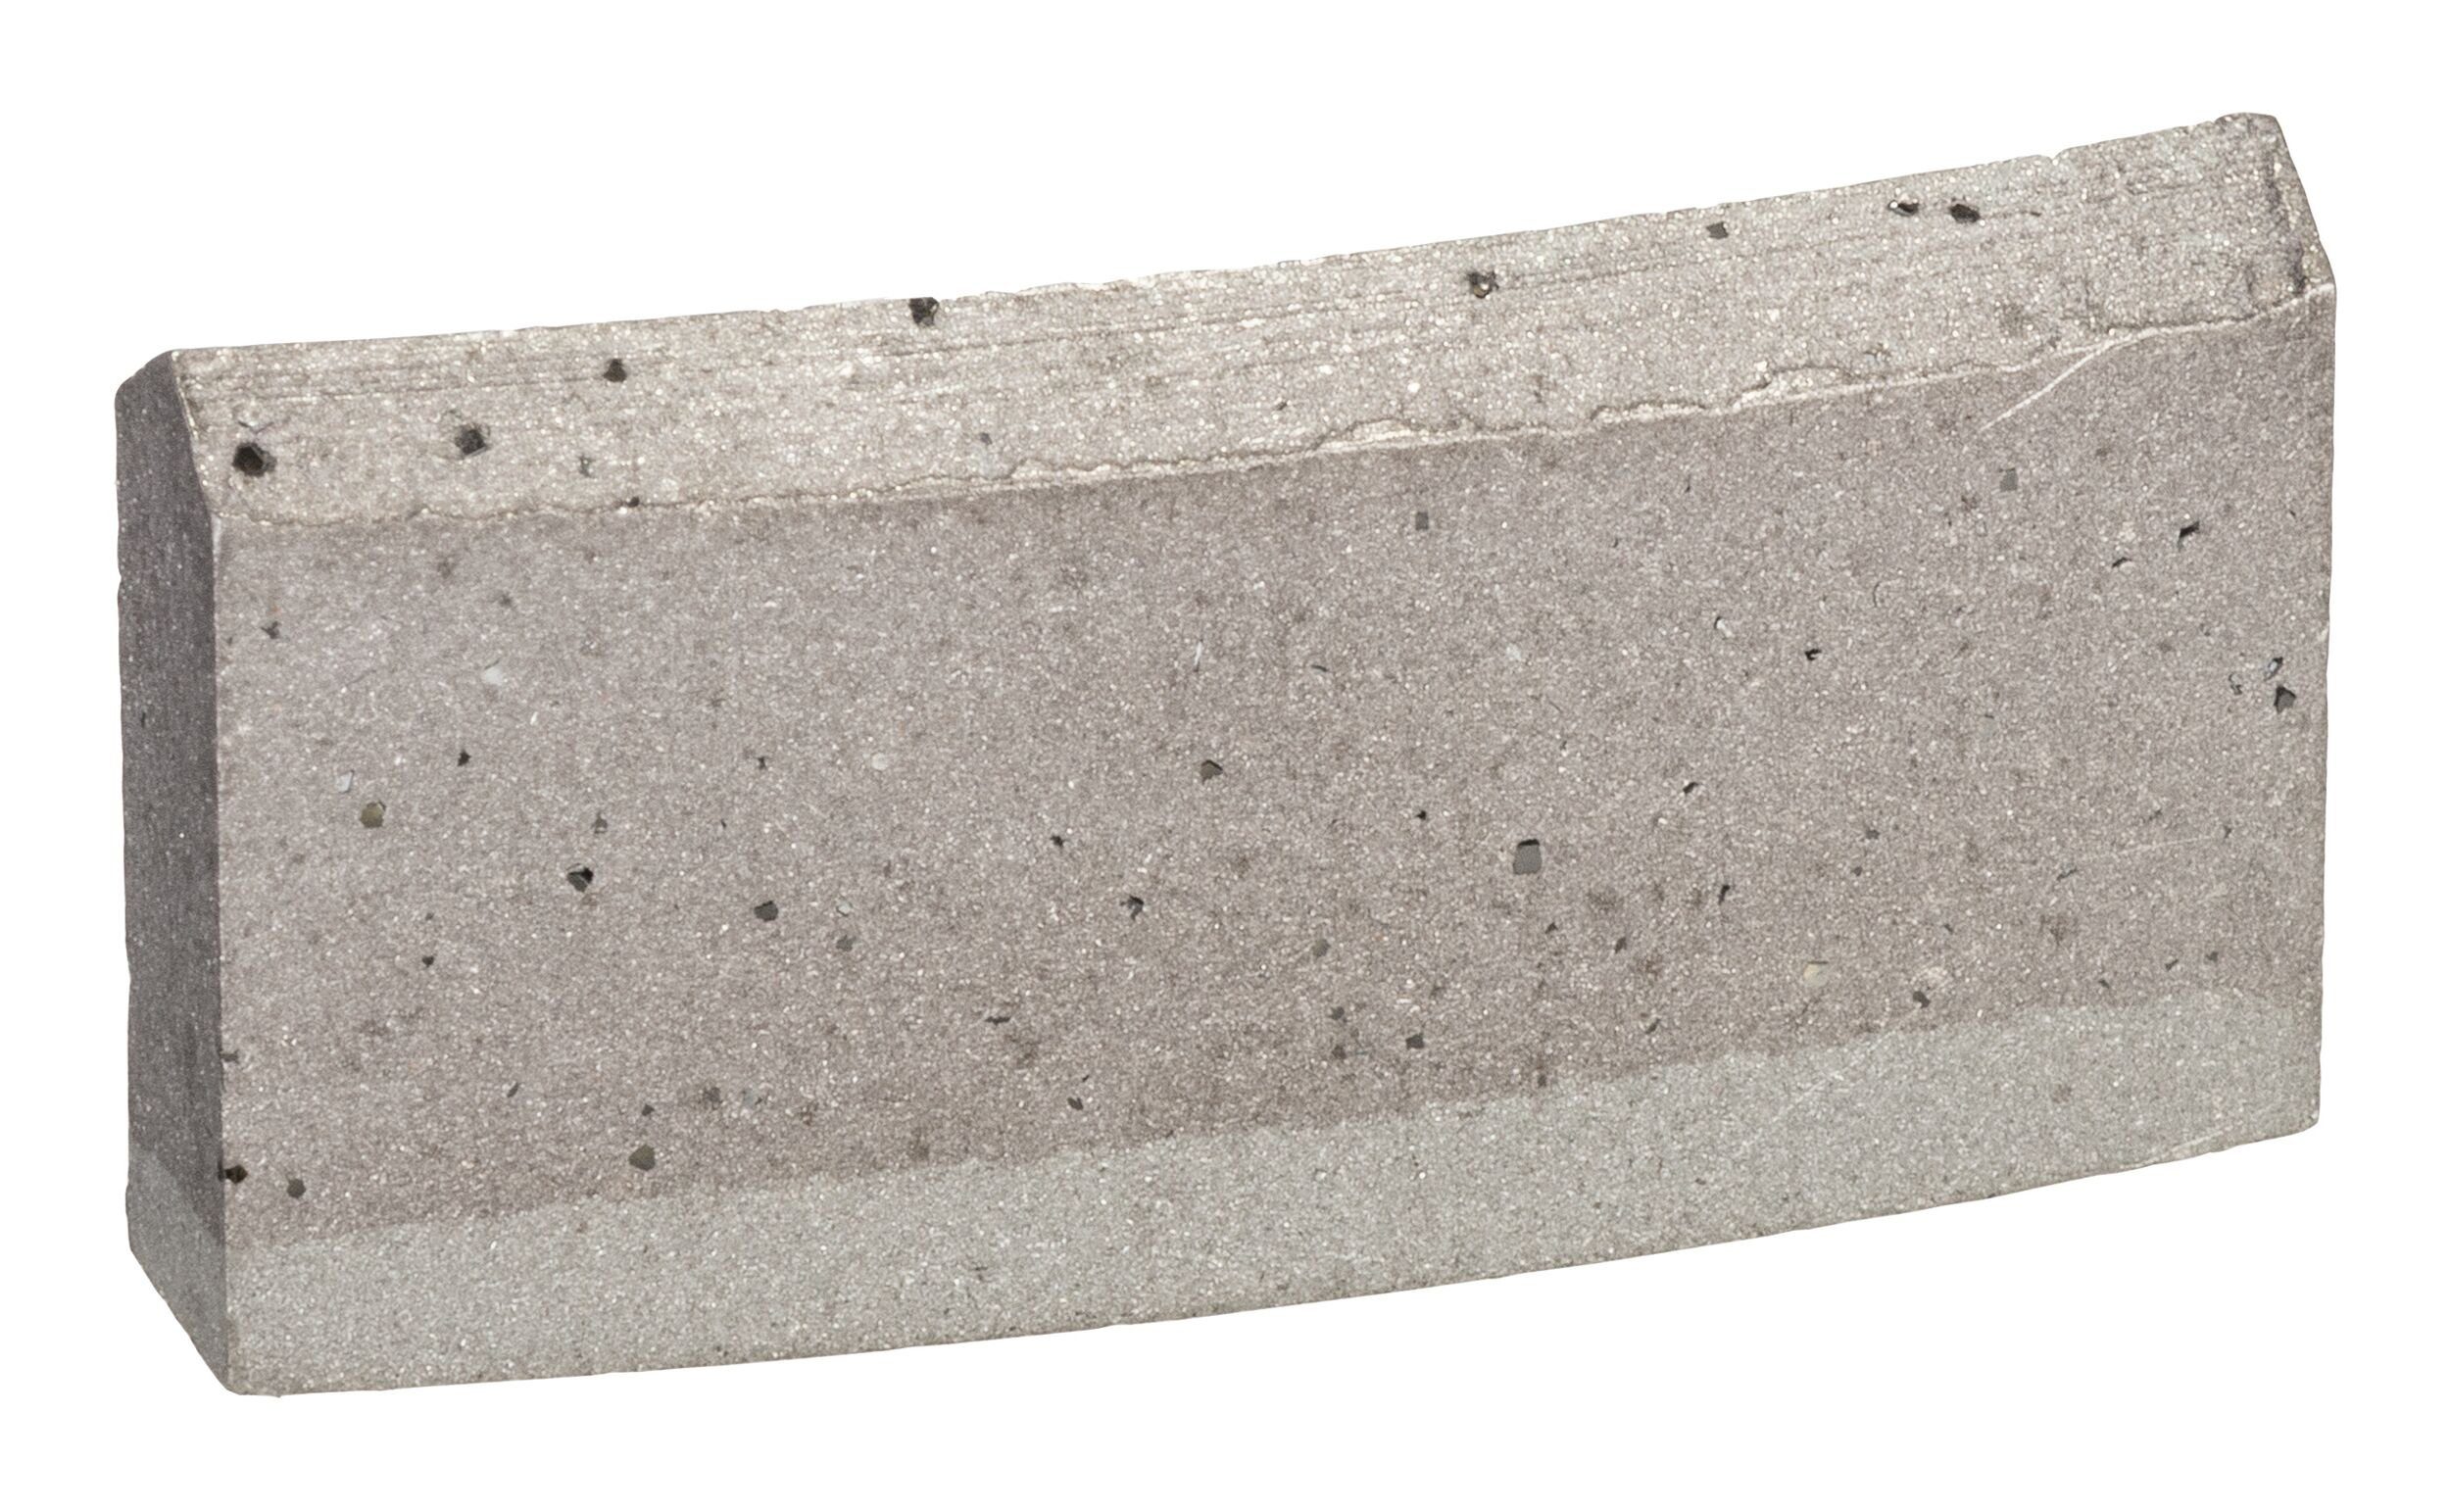 Concrete Segmente 1/4" Best f. BOSCH for Diamantbohrkronen 11 UNC Bohrkrone, 1